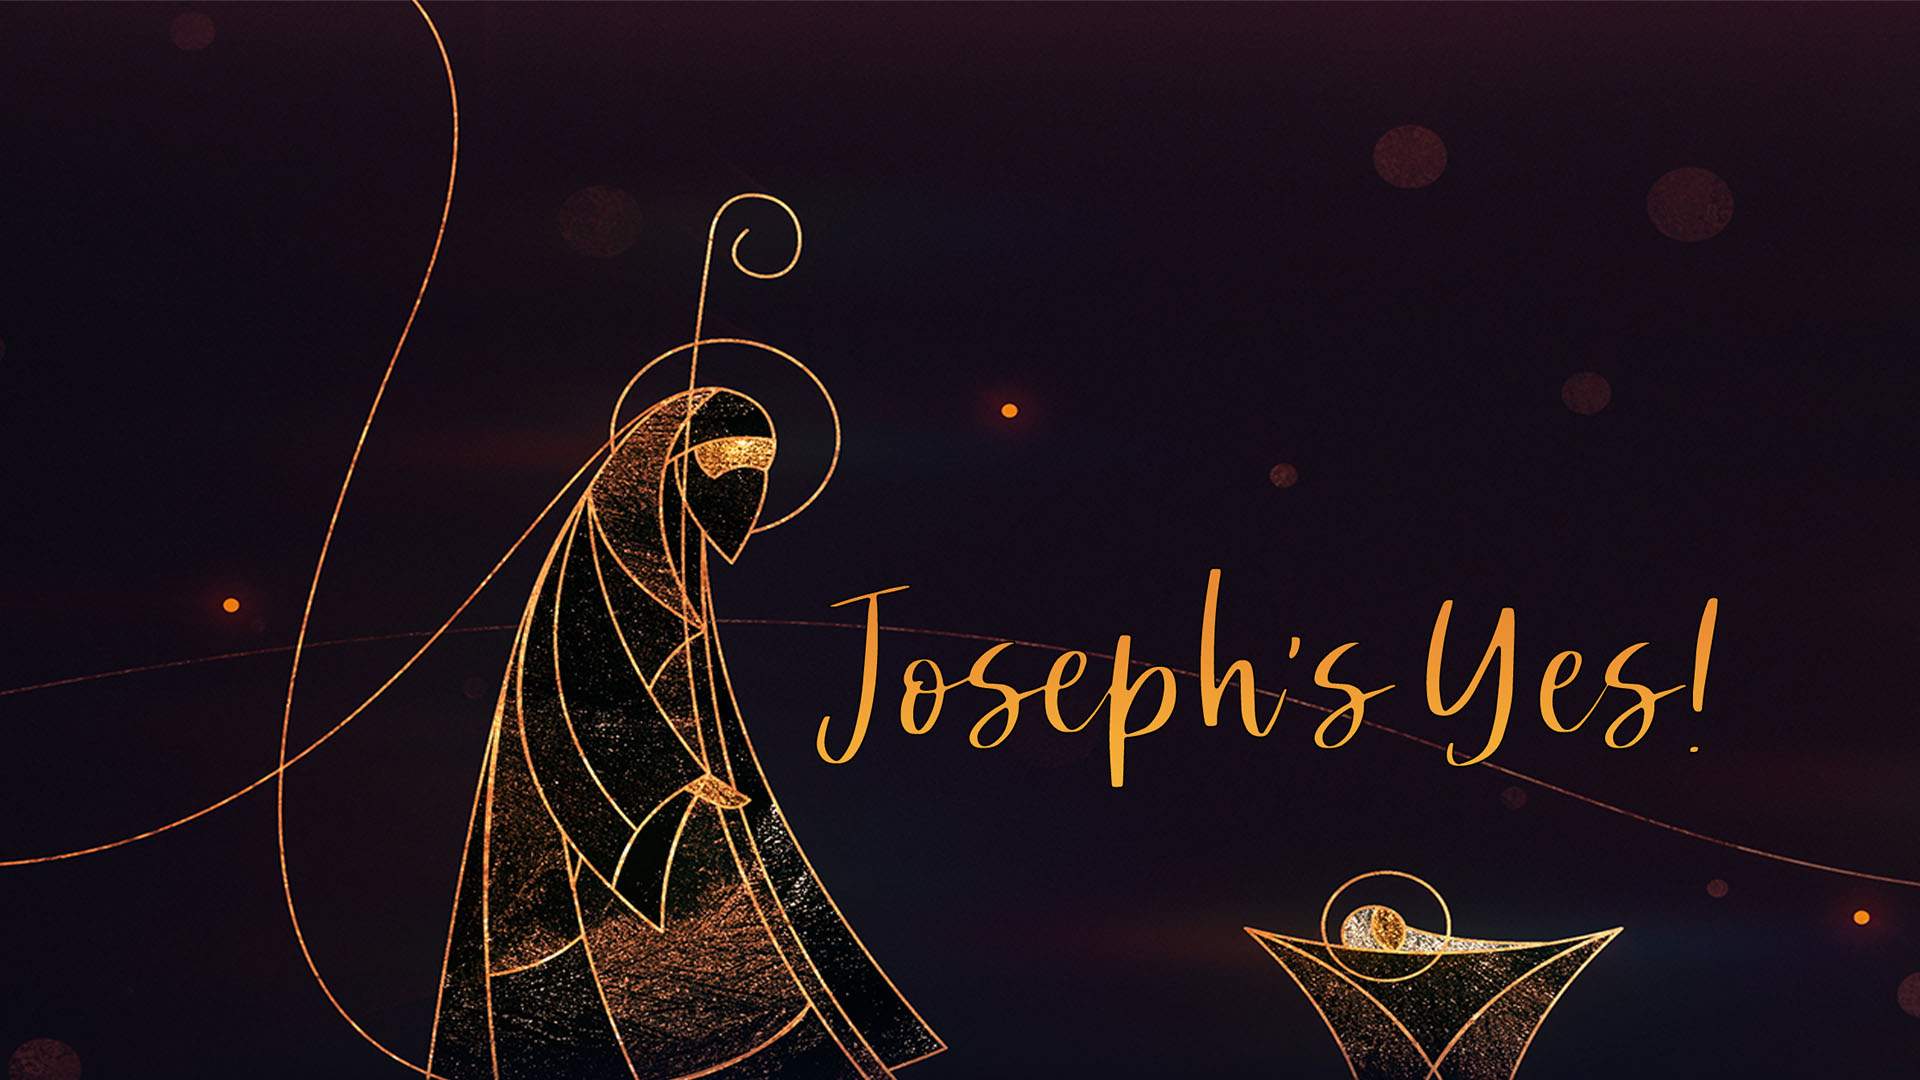 Joseph’s Yes Part 2